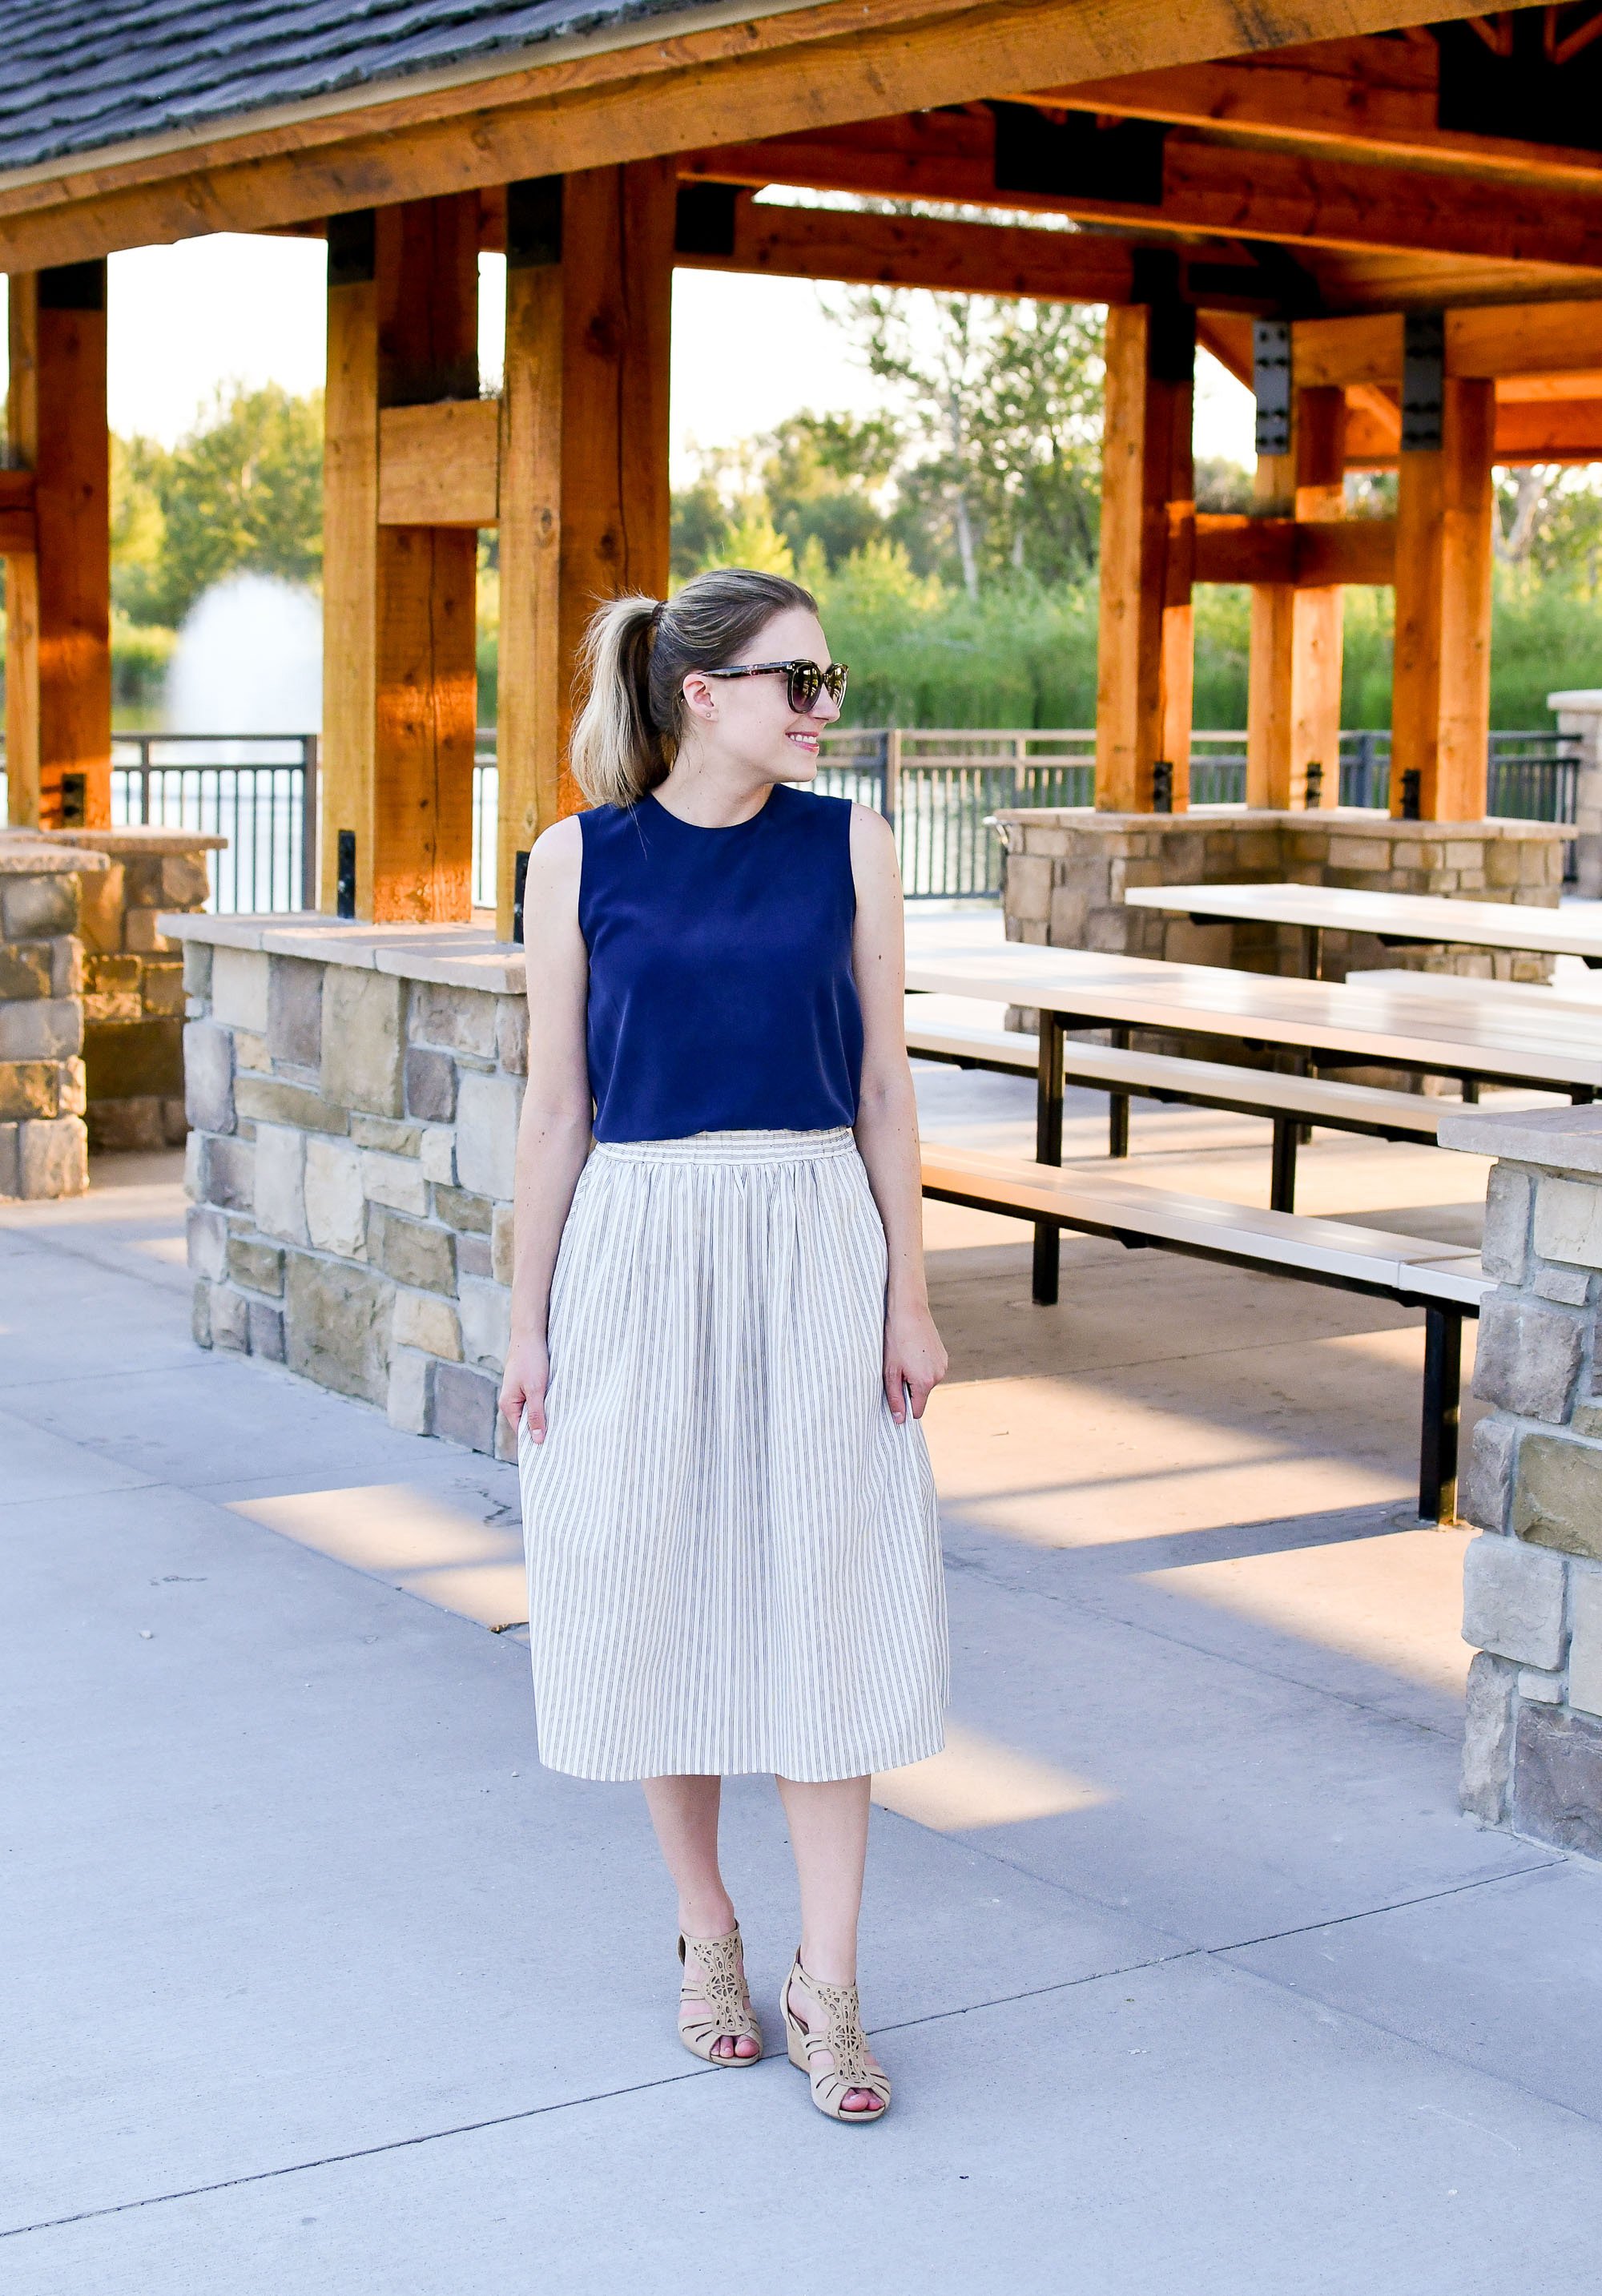 Grad School Interview Outfit Idea: Simple Silk Shell + Striped Midi Skirt | Cotton Cashmere Cat Hair